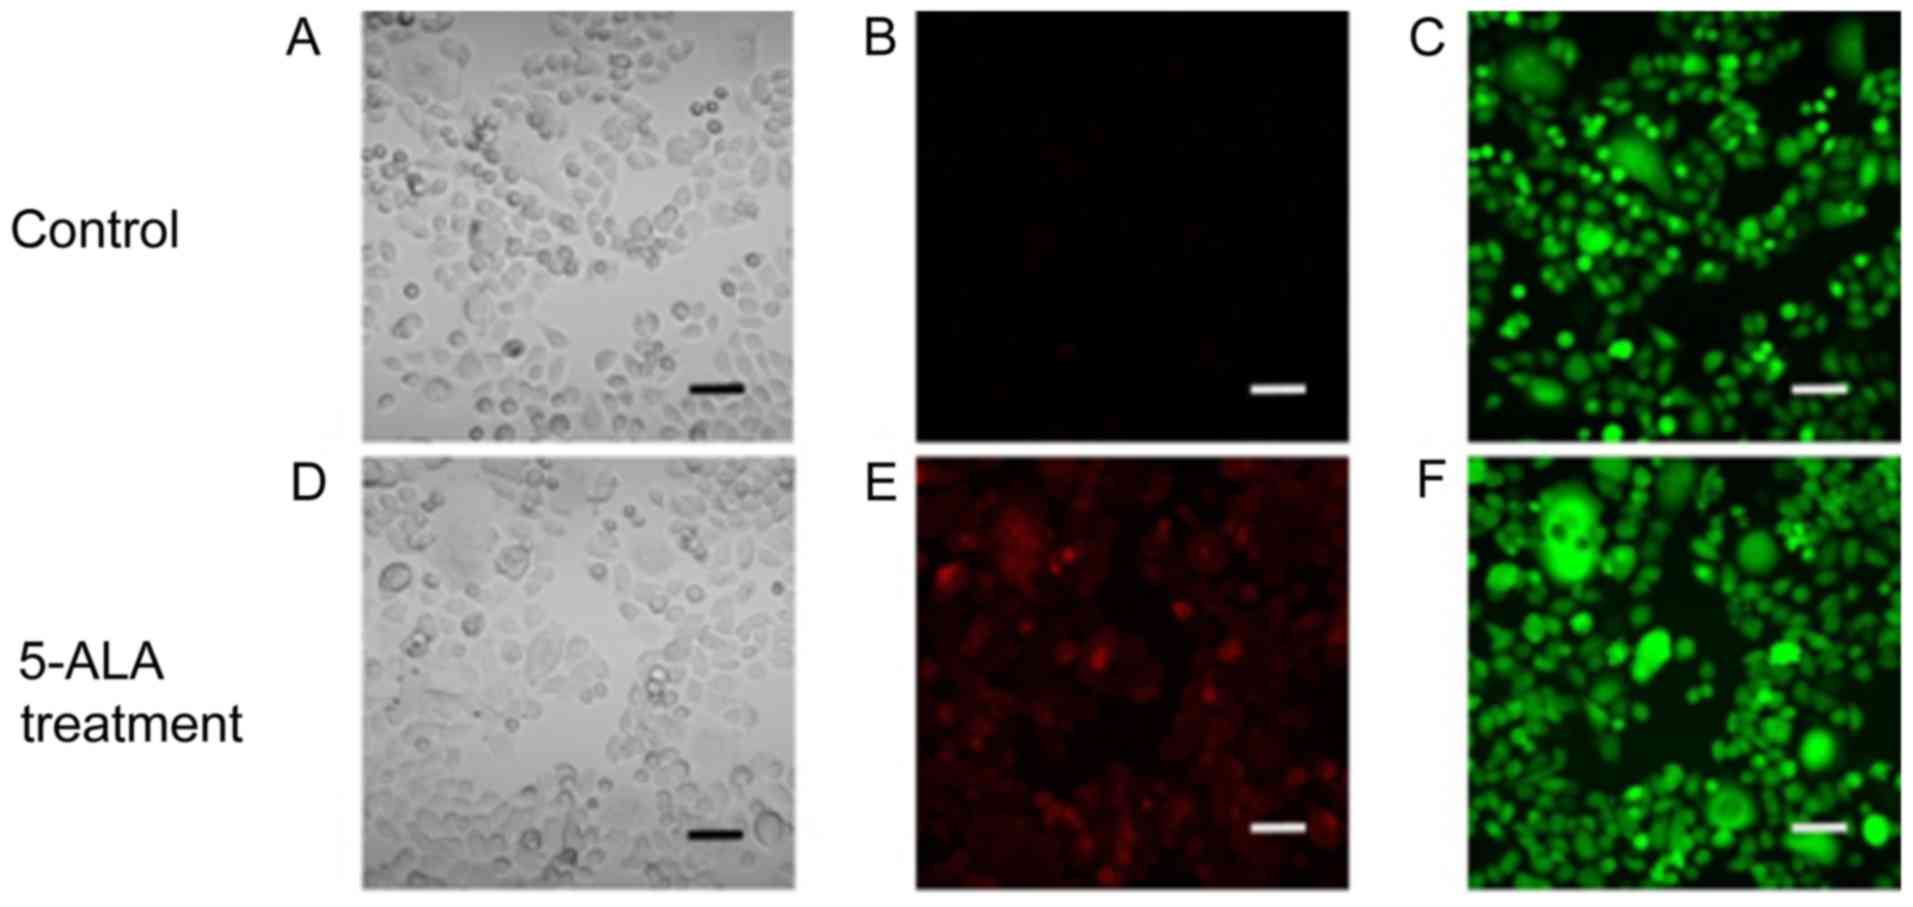 Photodynamic Diagnosis Of Peritoneal Metastasis In Human Pancreatic Cancer Using 5 Aminolevulinic Acid During Staging Laparoscopy